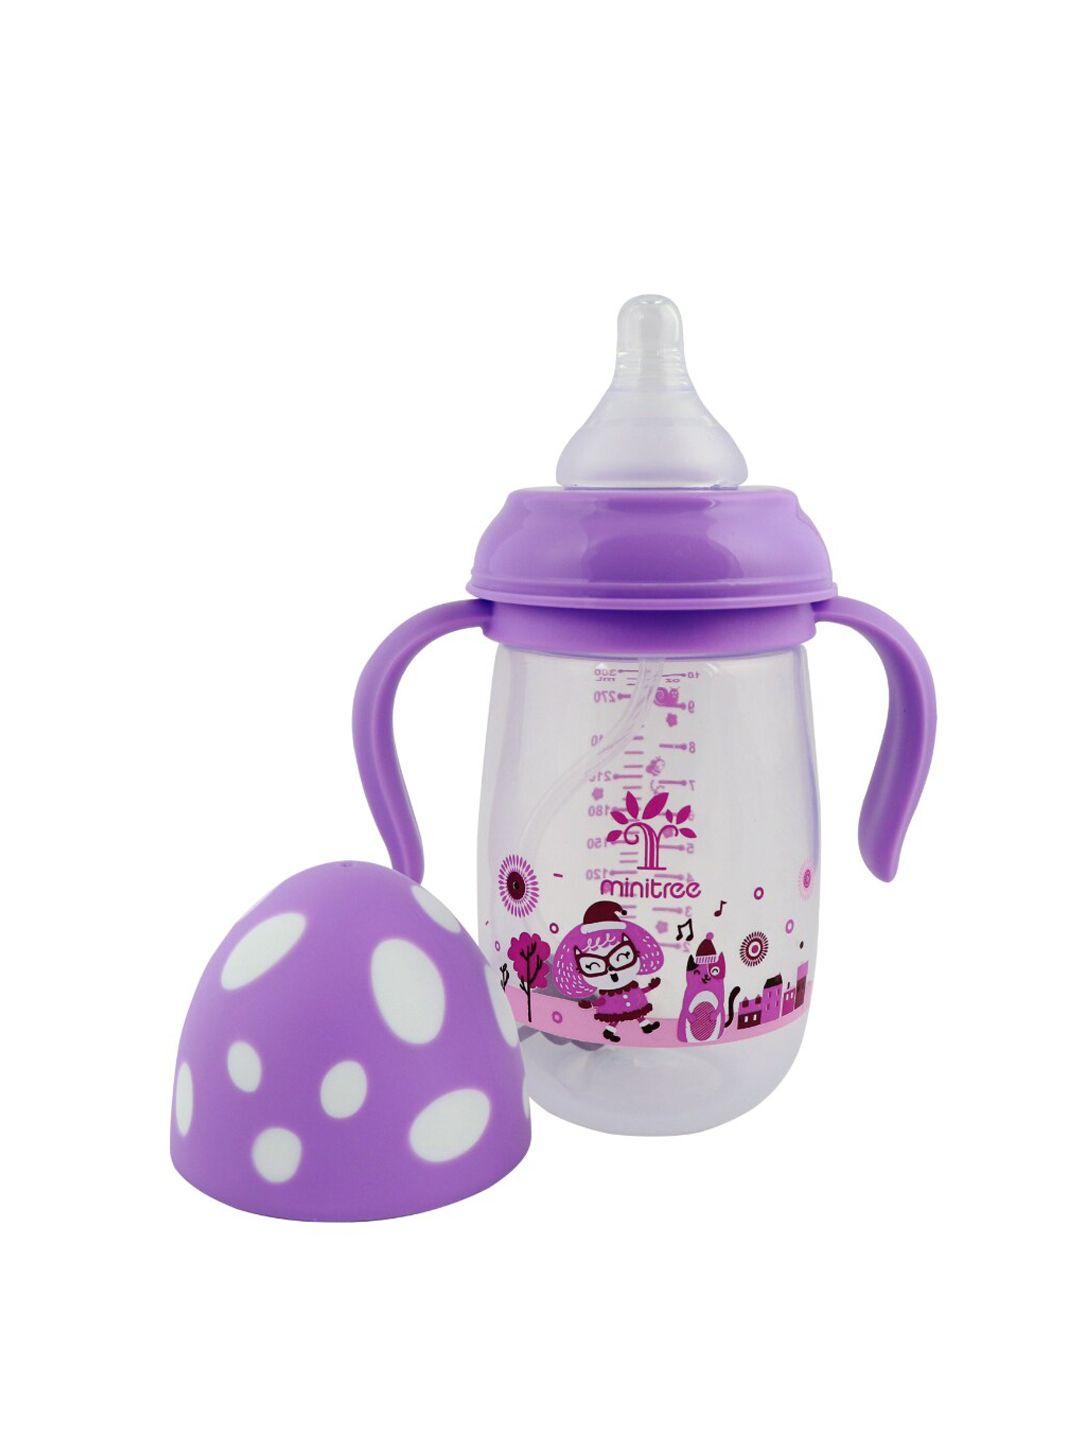 guchigu purple baby bpa free feeding bottles with handle 300ml - 9011b